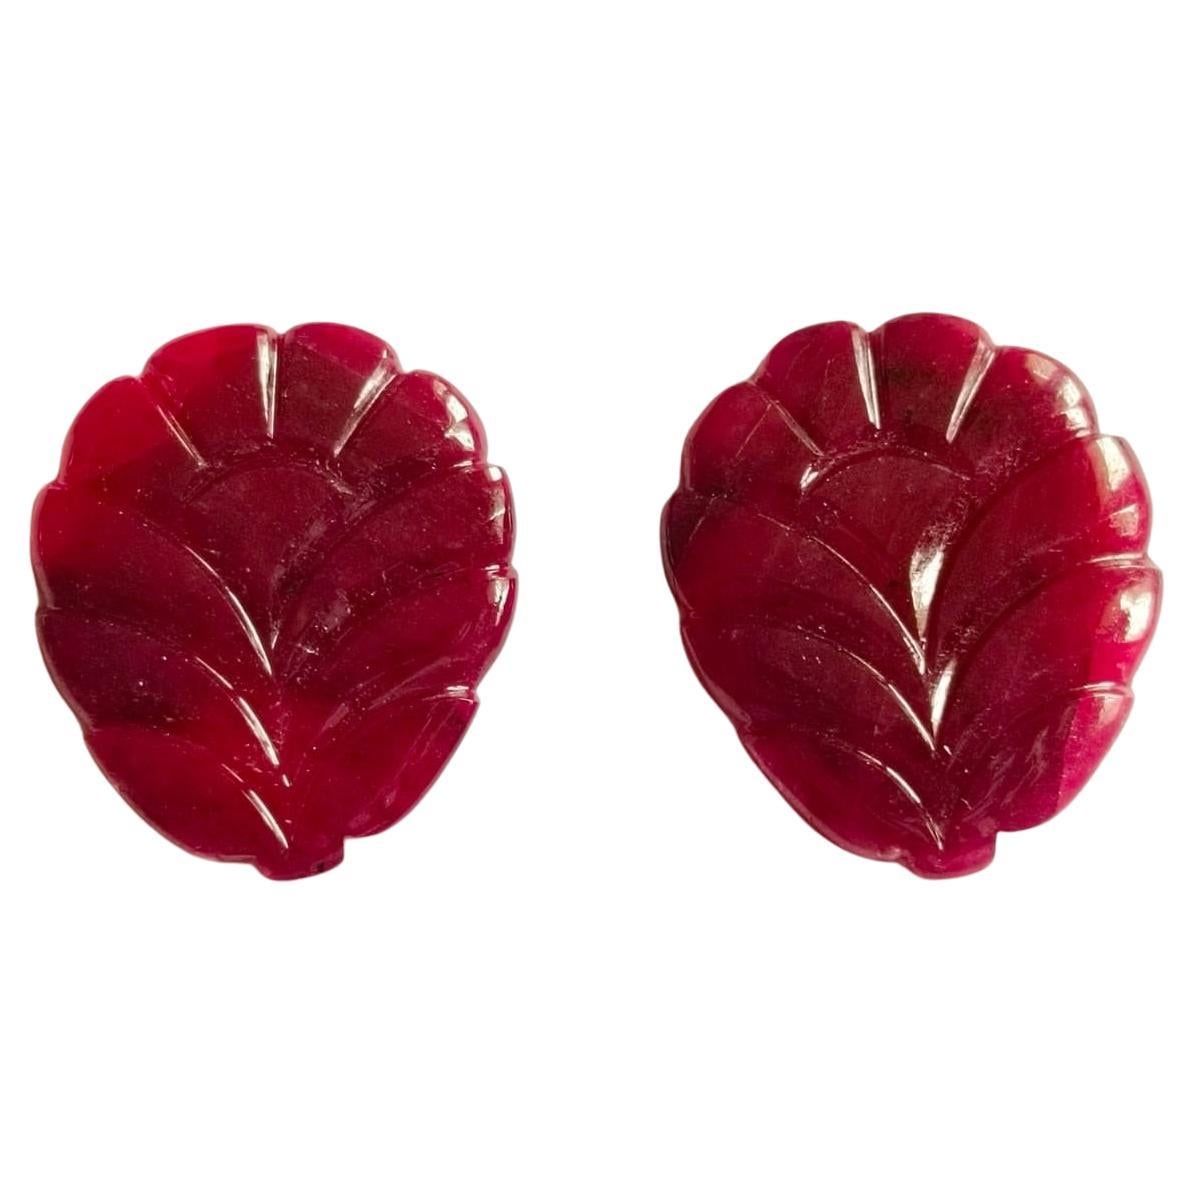 25.14 Carat Ruby Carving Leaf Shape Pair Loose Gemstone